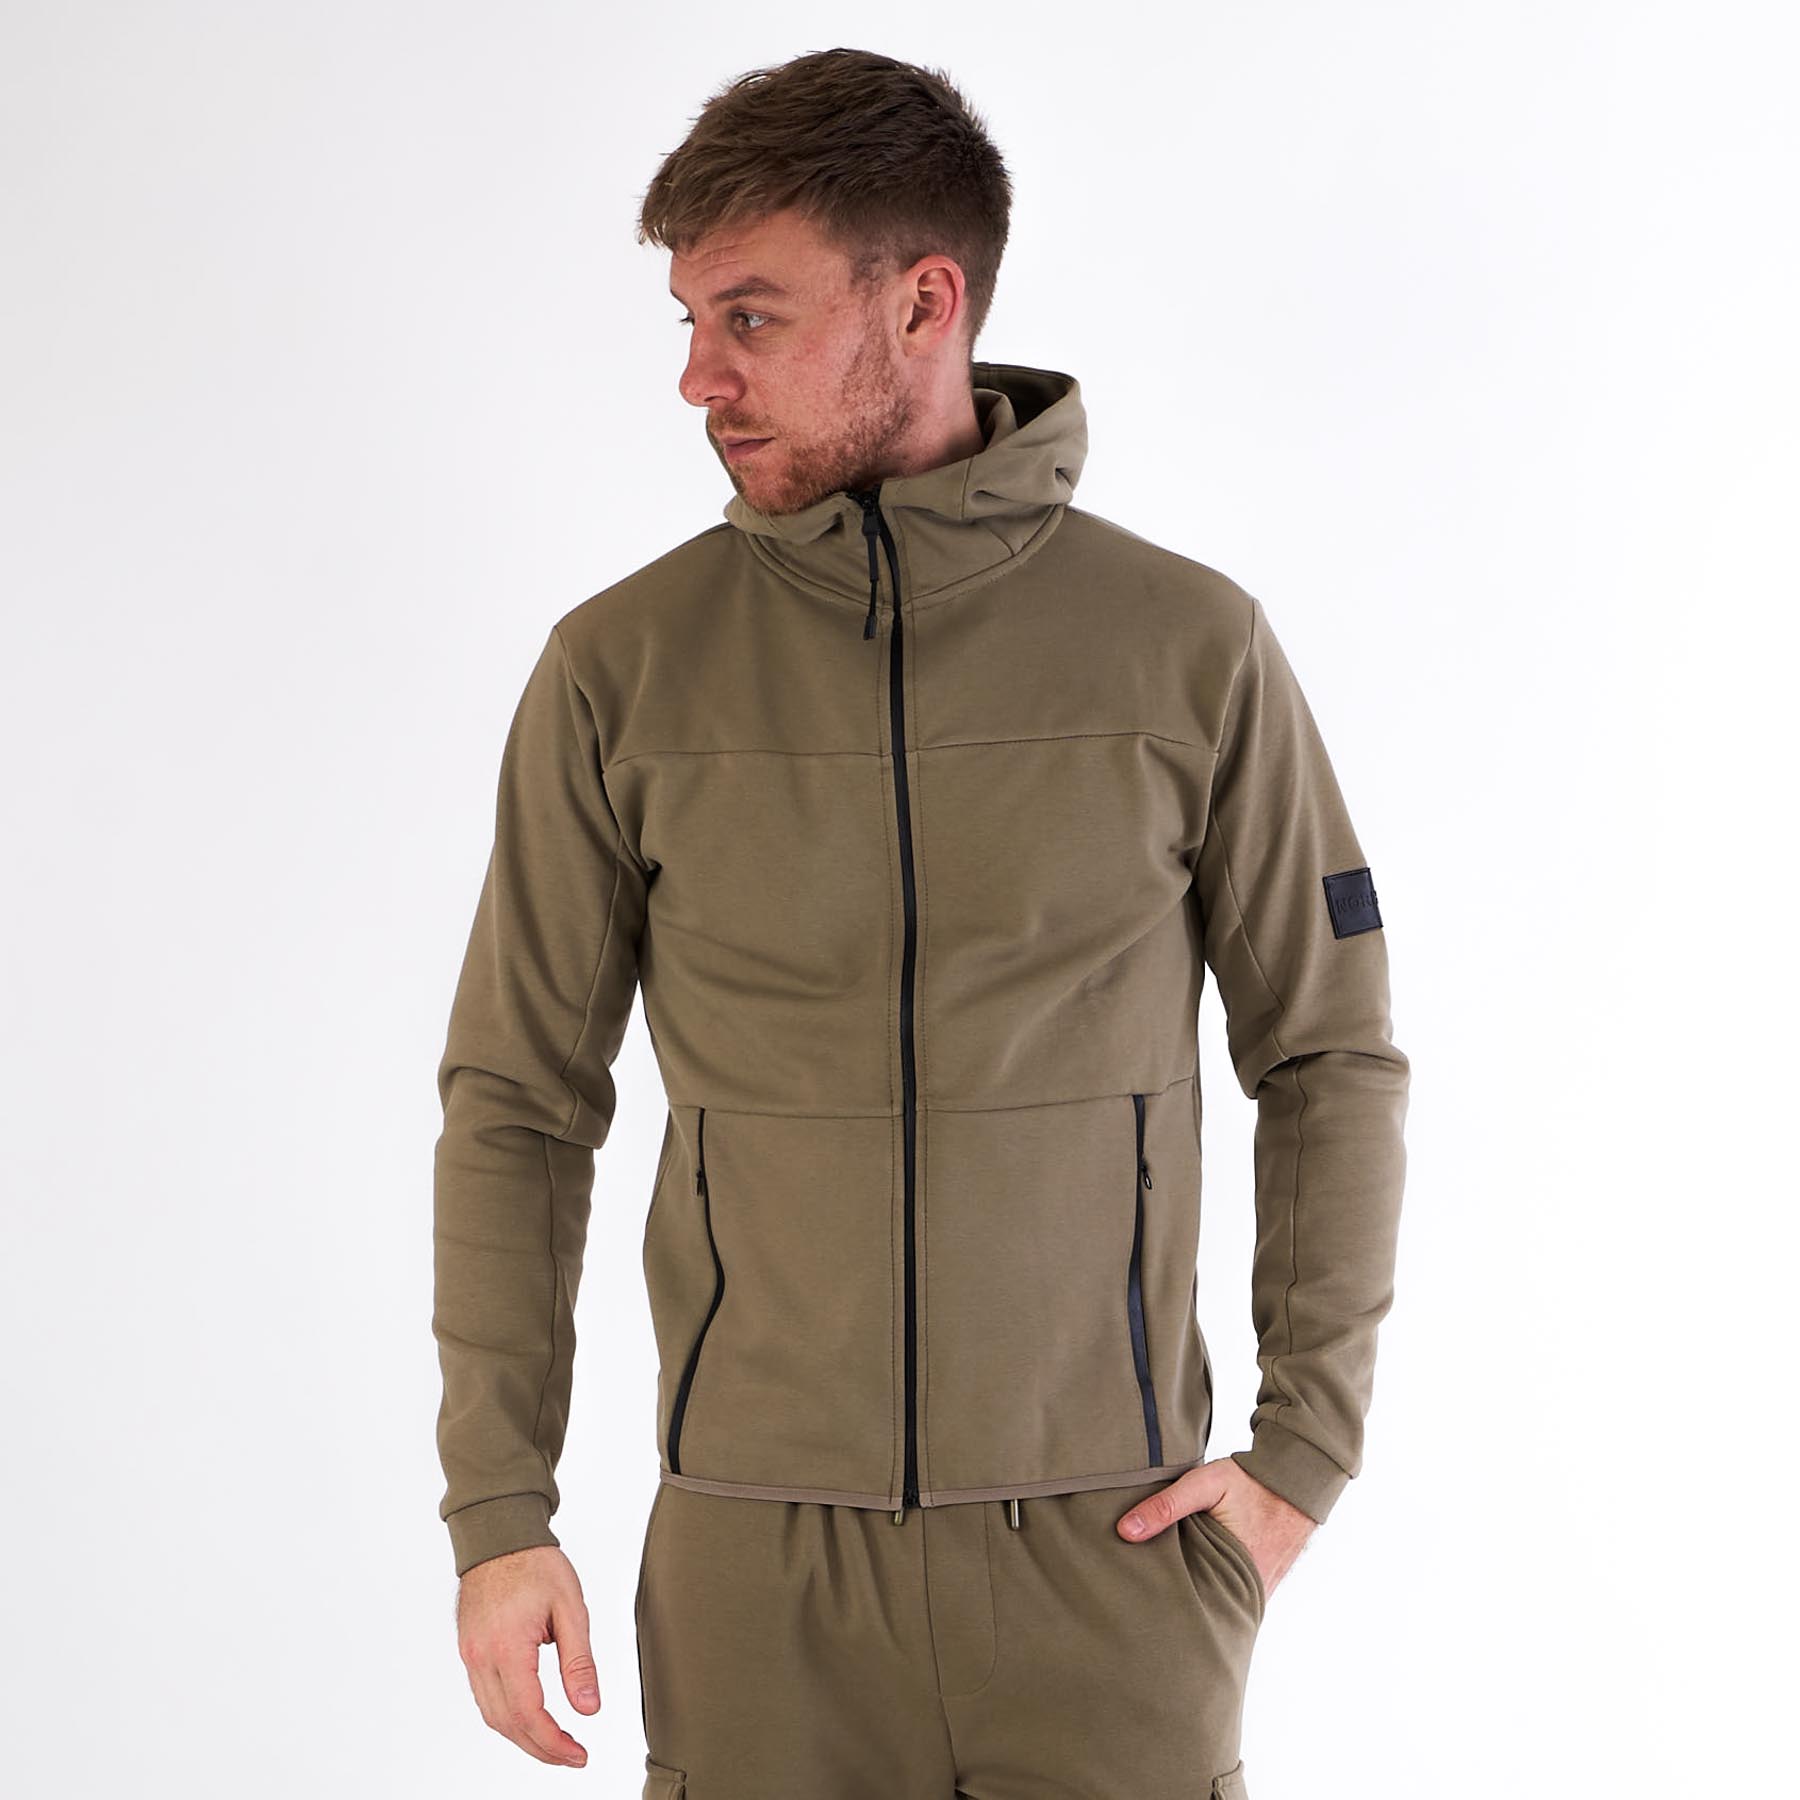 Noreligion - Tech zip hoodie - Sweatshirts og trøjer til herre - Grøn - XXL